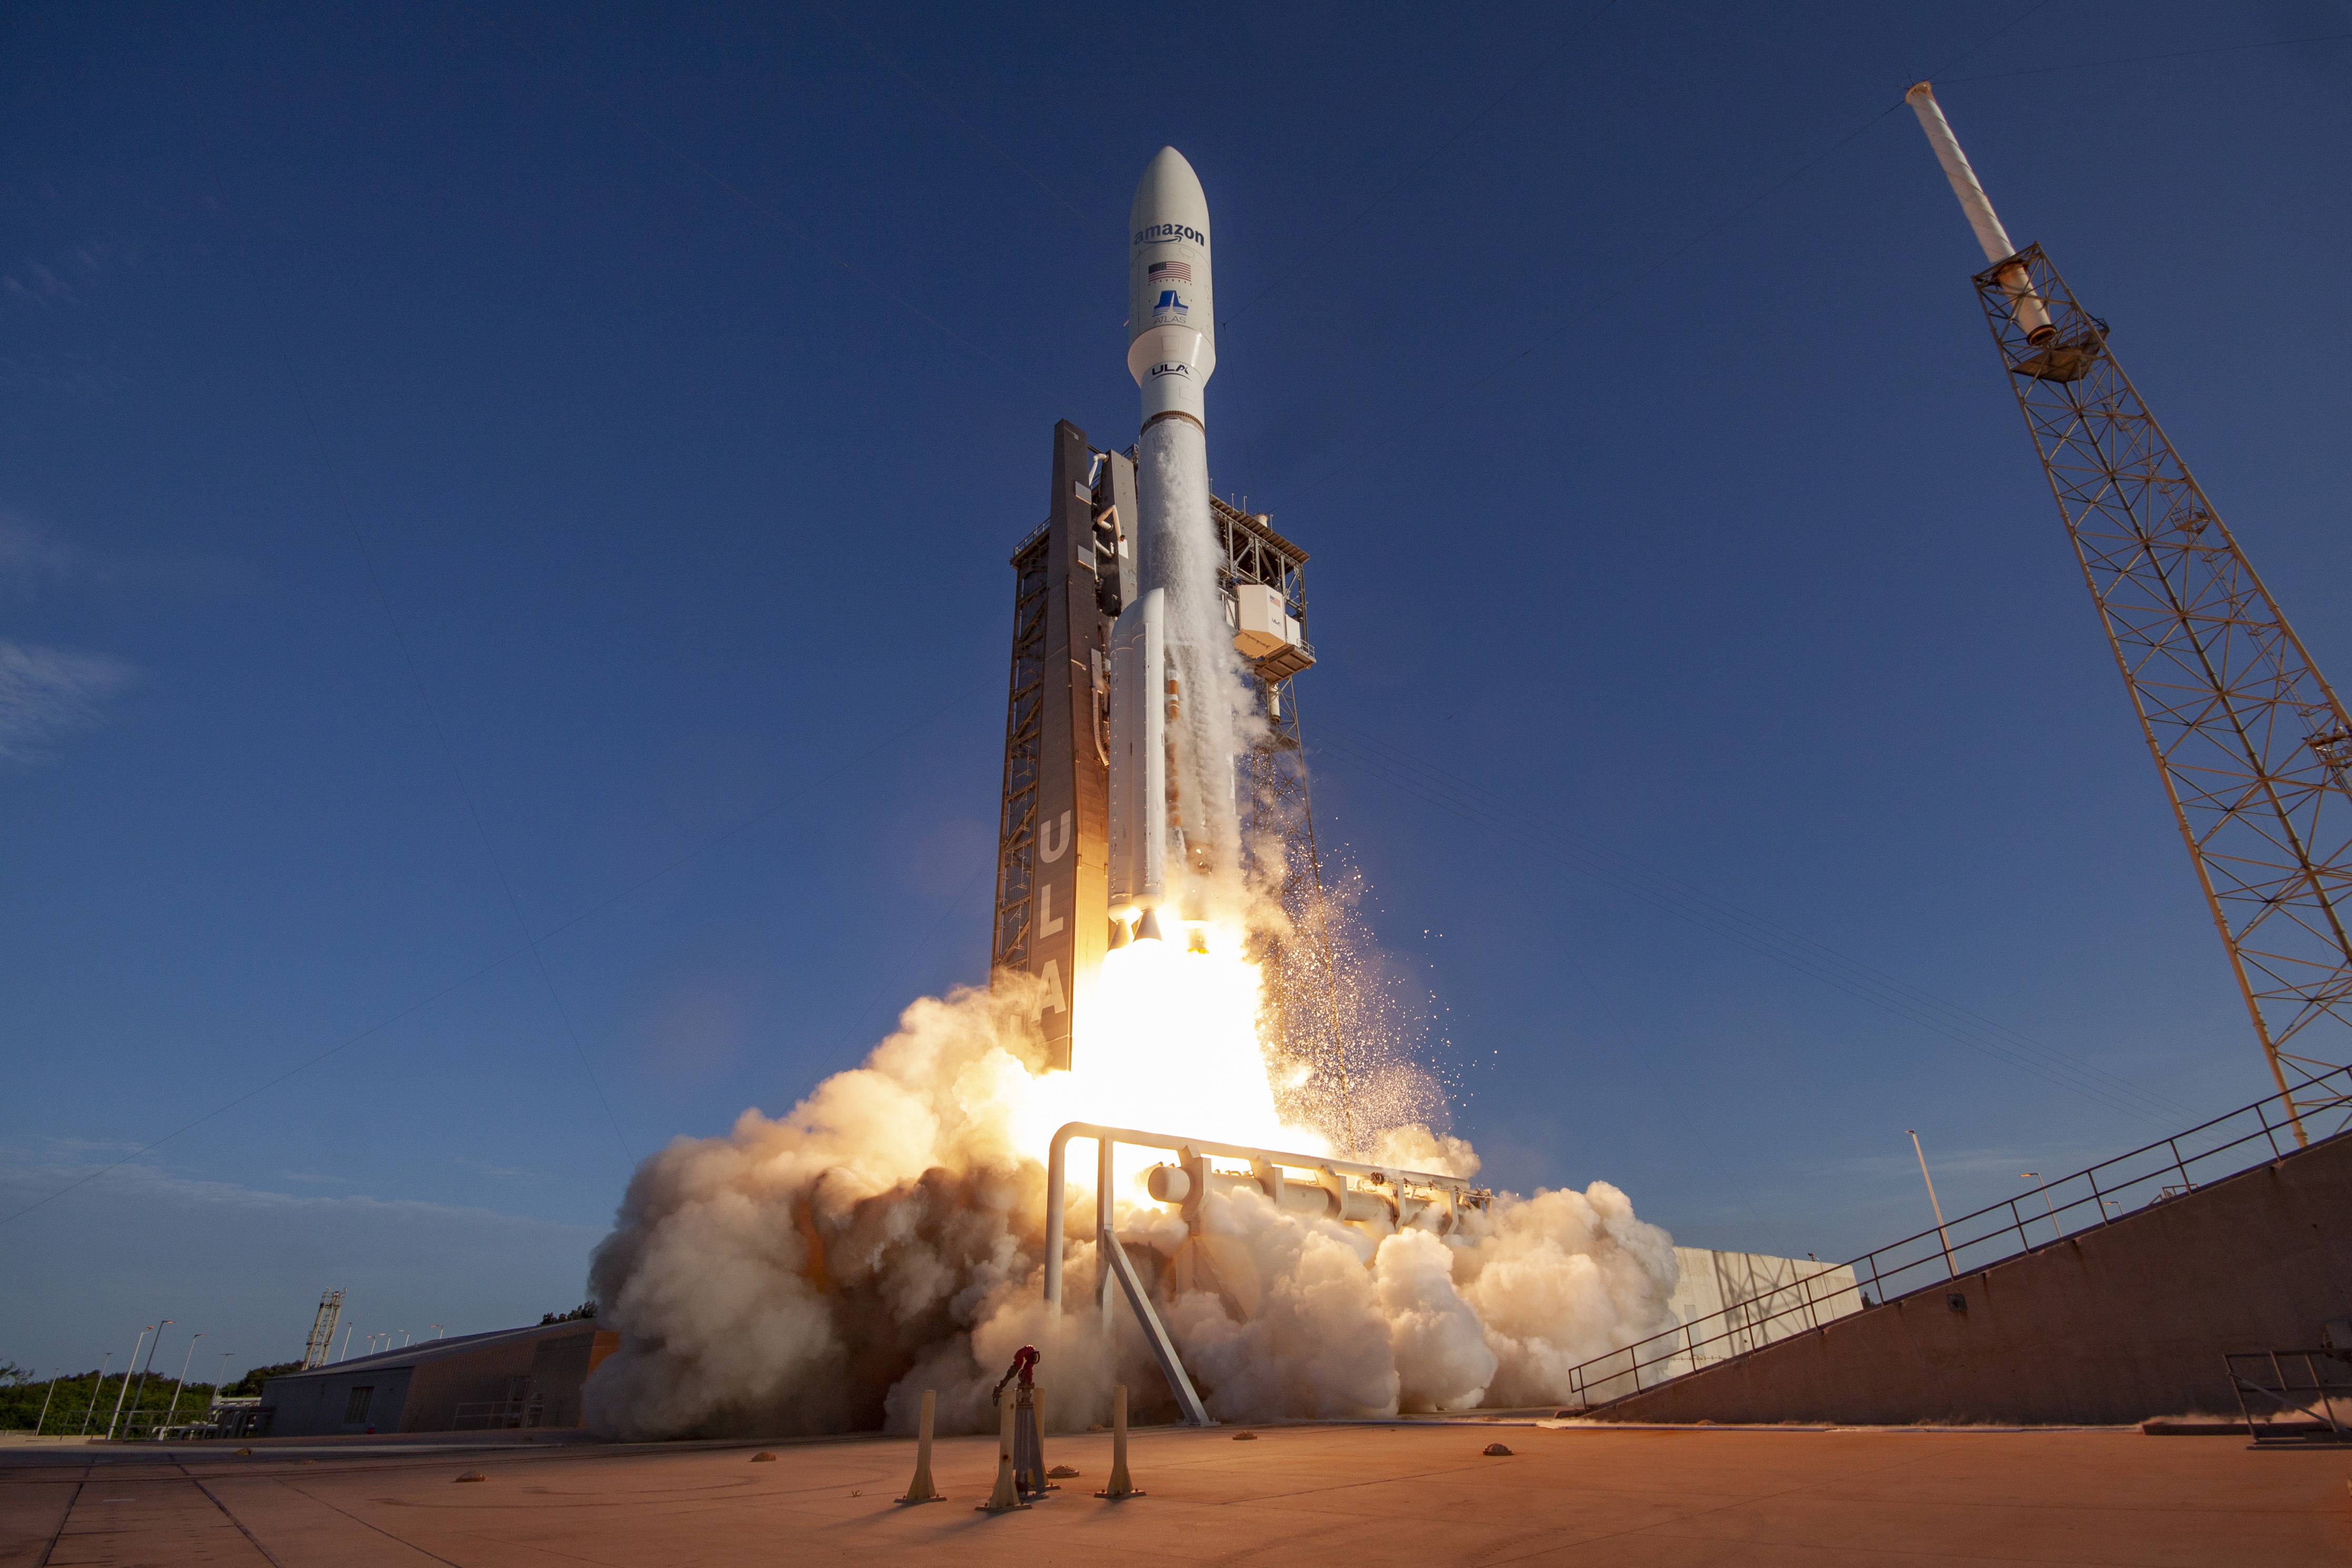 Amazon Brand on ULA Atlas V Rocket